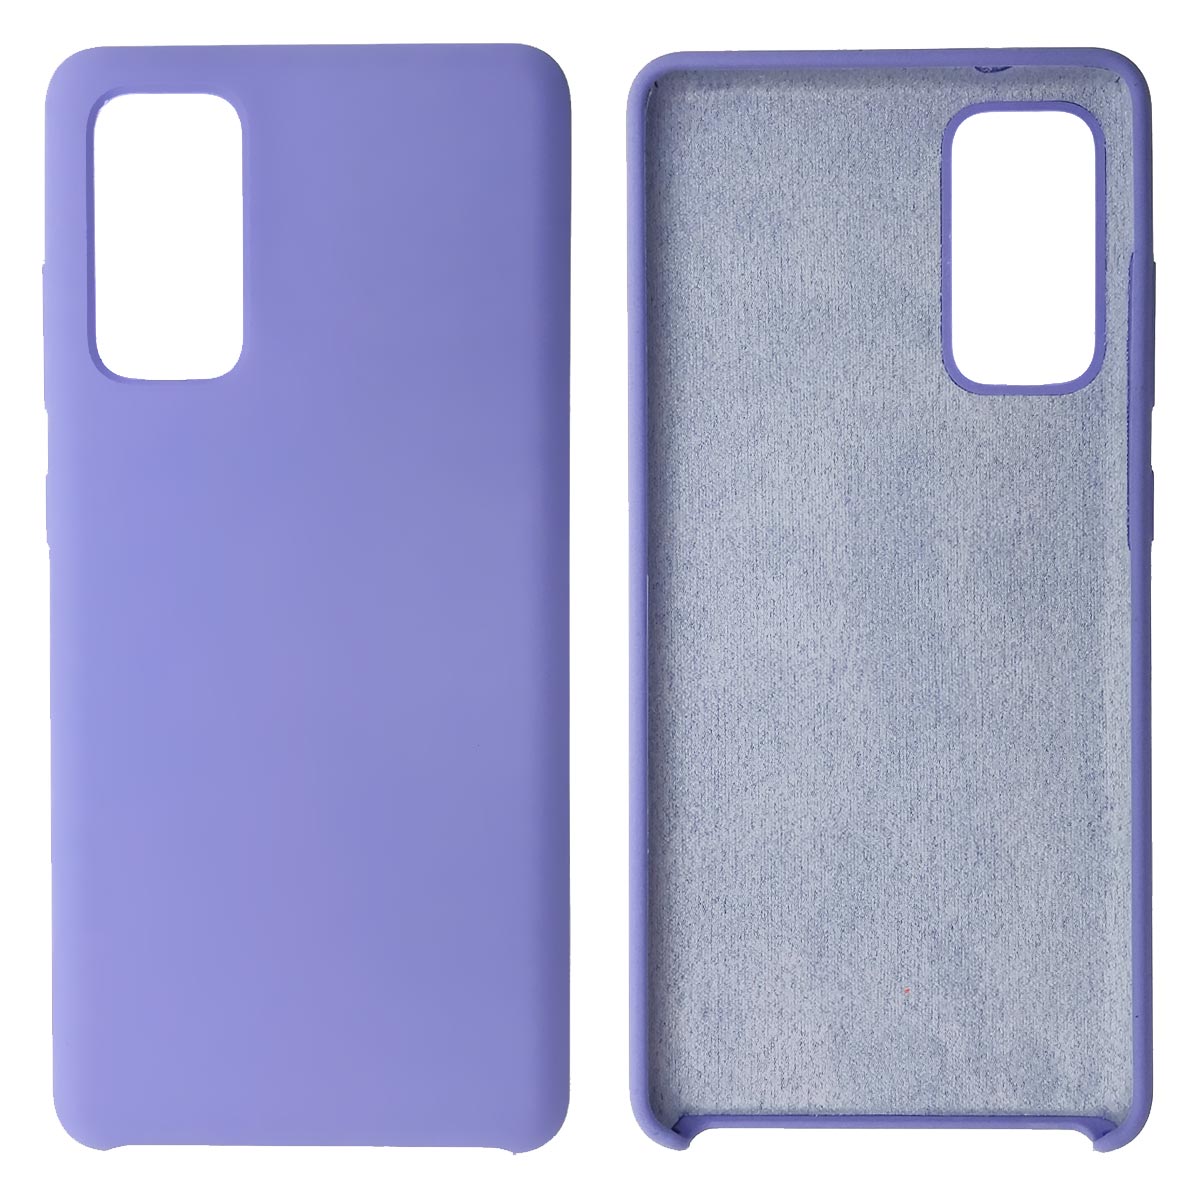 Чехол накладка Silicon Cover для SAMSUNG Galaxy S20FE, силикон, бархат, цвет сиреневый